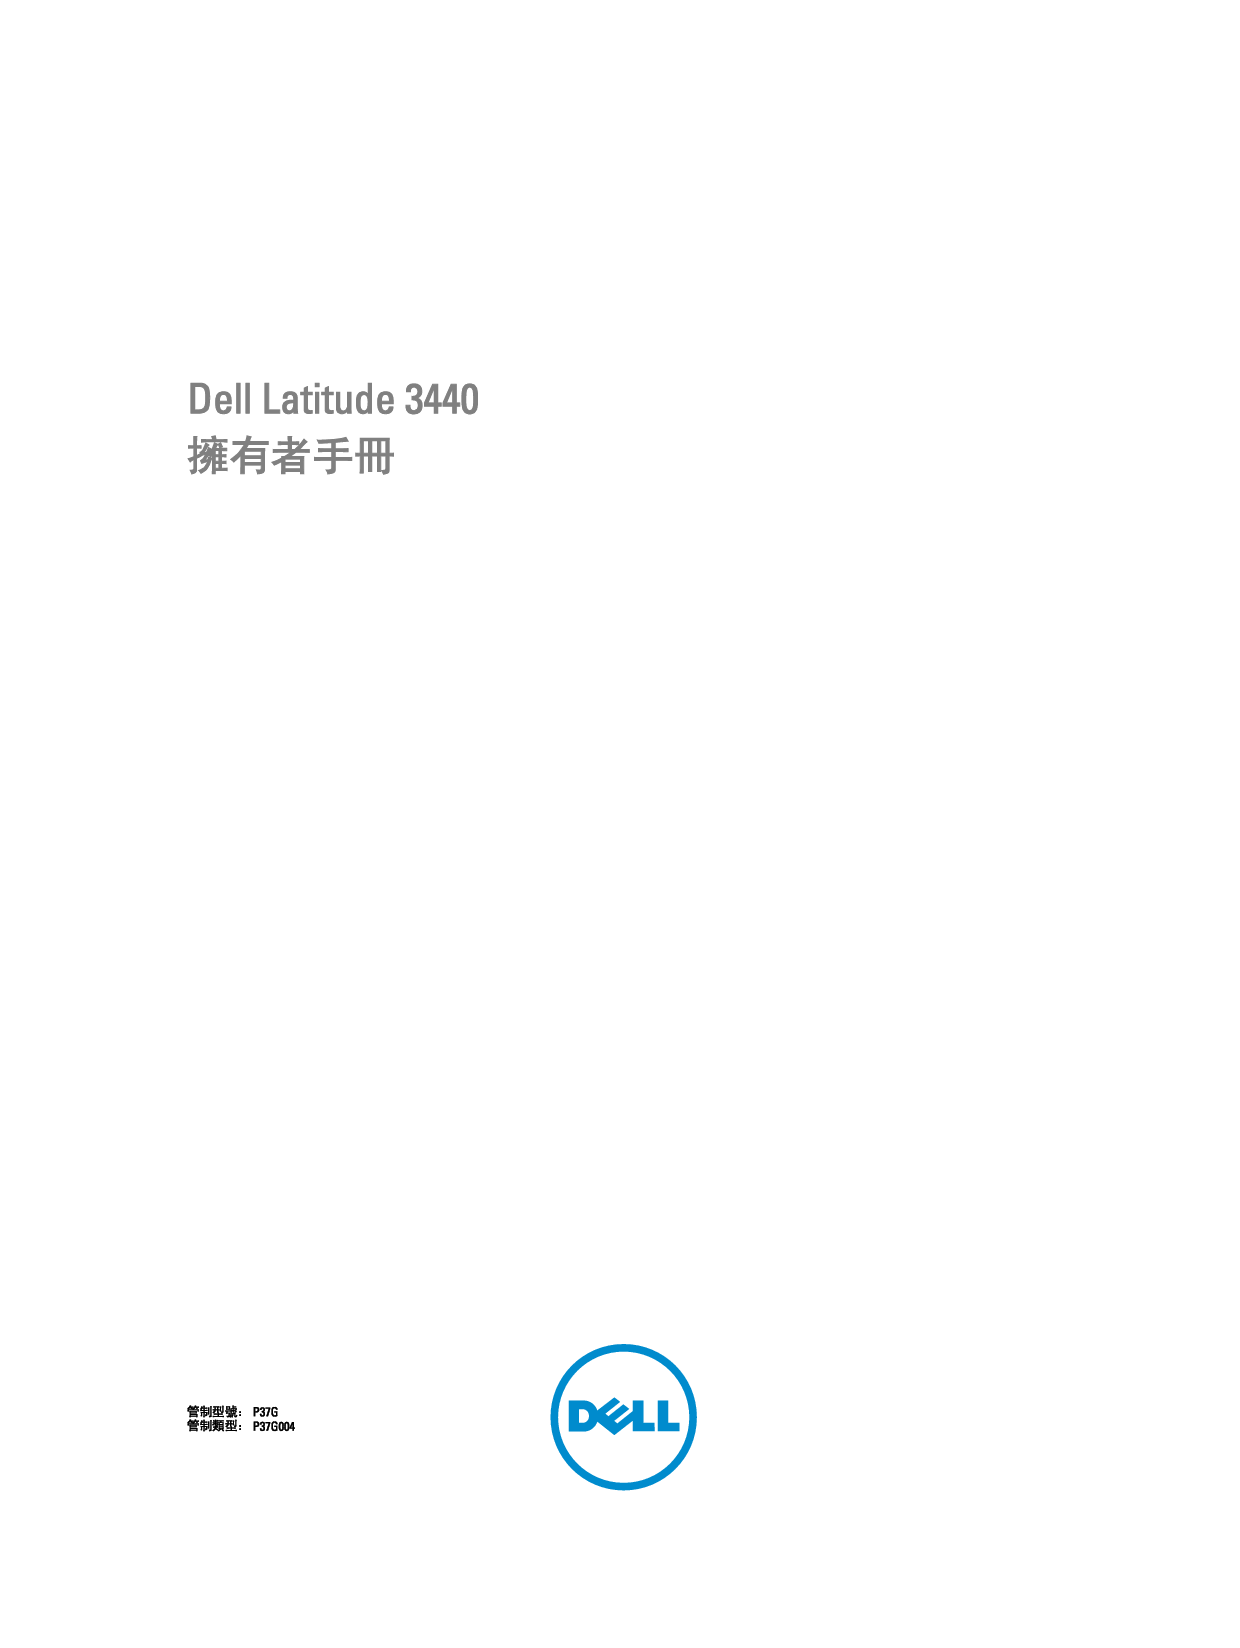 戴尔 Dell Latitude 3440 繁体 用户手册 封面